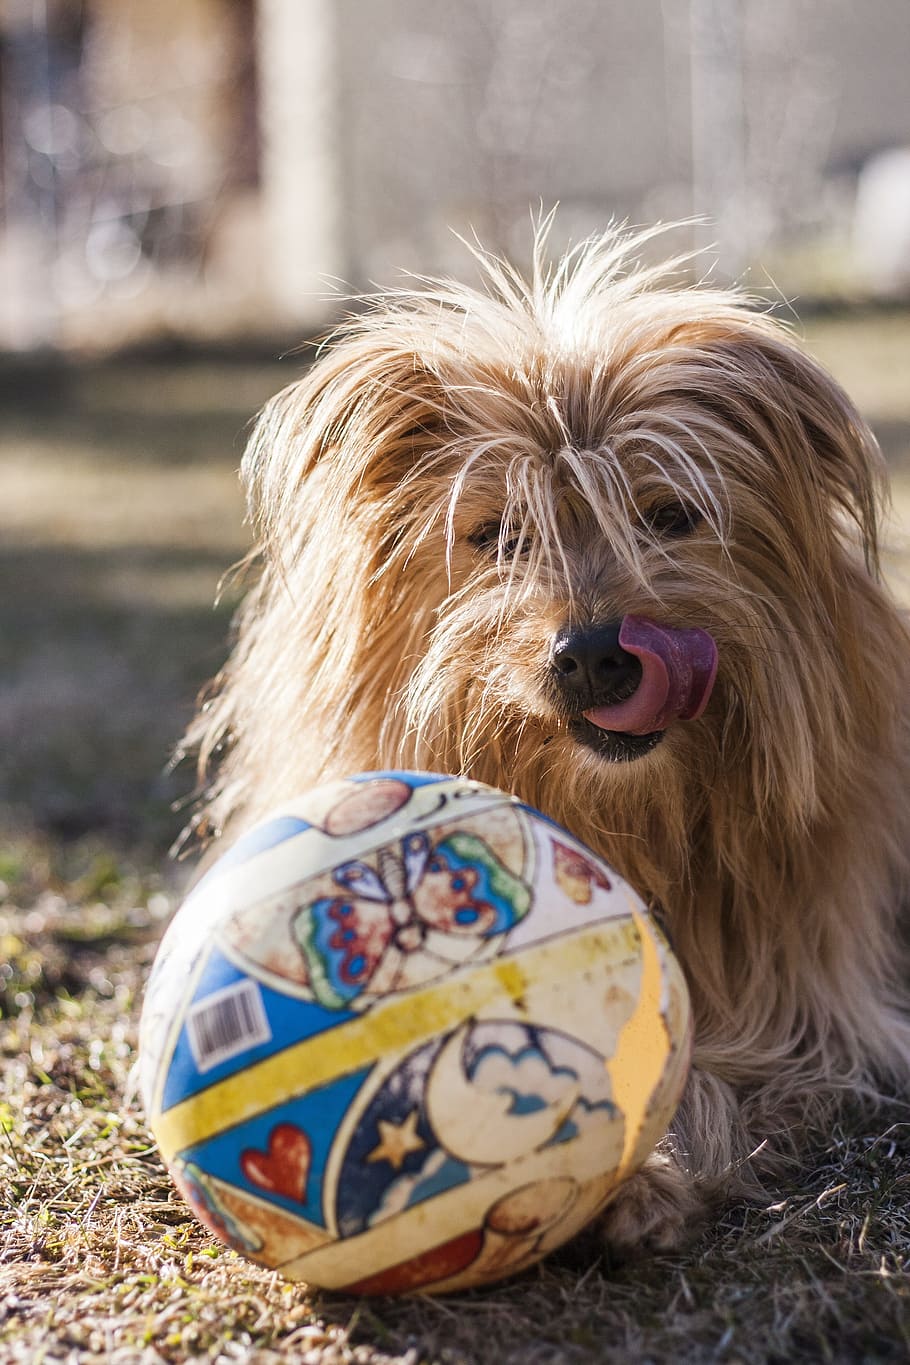 Dog, Hybrid, Medium, Ball, Tongue, dog, hybrid, ball, tongue, wuschelig, pet, play